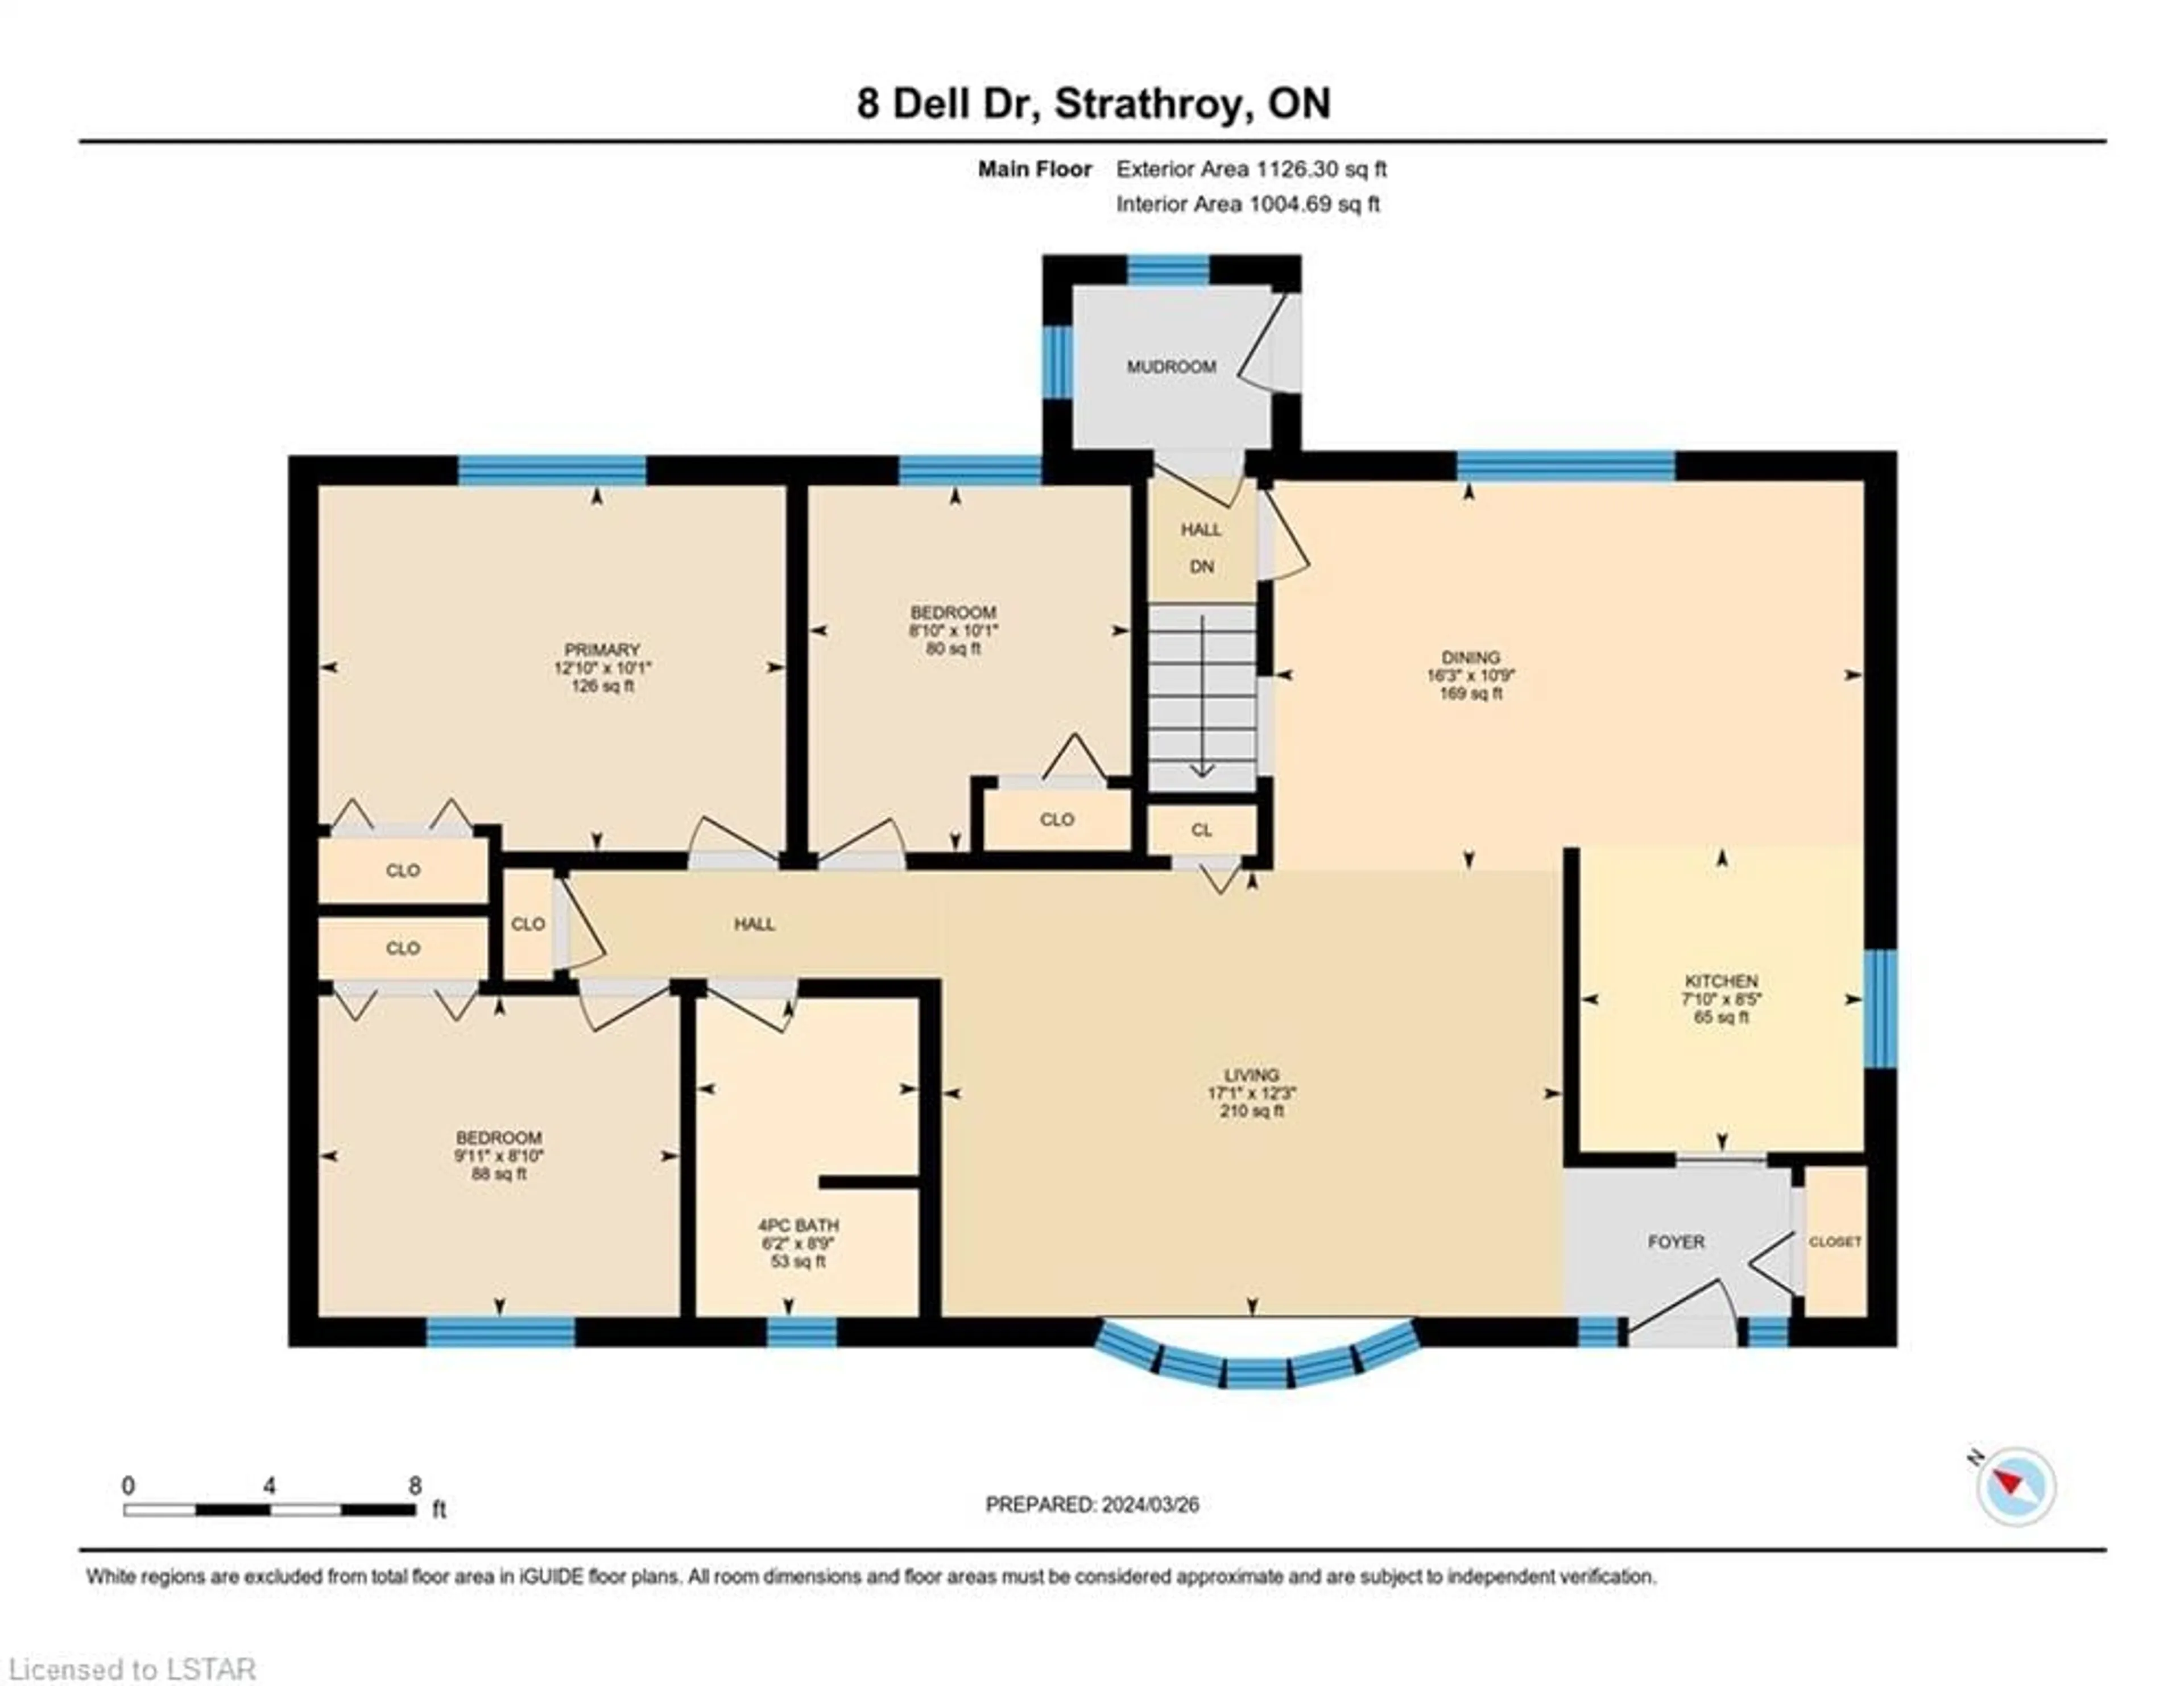 Floor plan for 8 Dell Dr, Strathroy Ontario N7G 1C6